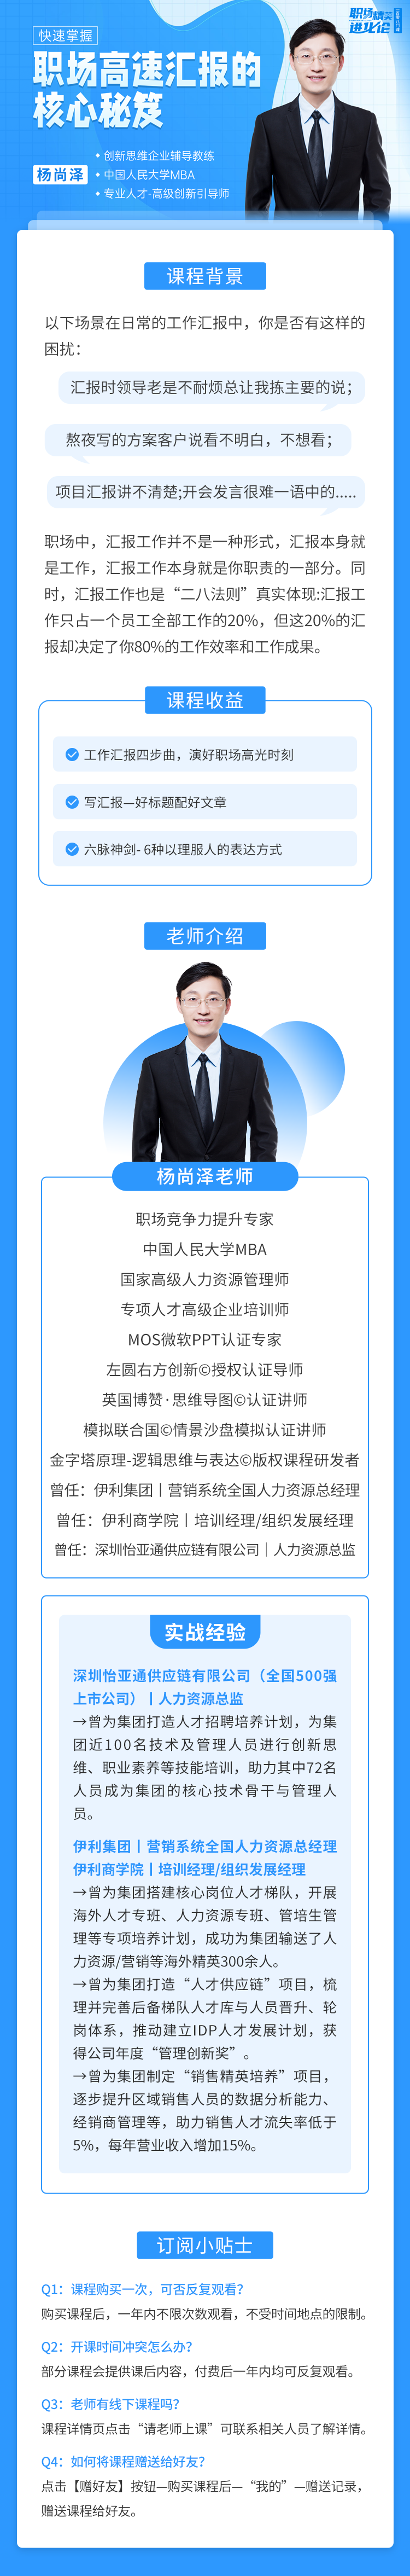 https://ksb-1253359580.cos.ap-guangzhou.myqcloud.com/newhdp/live_cover/live/21447/926203e4b47a8d67c02c166f72743ead.png